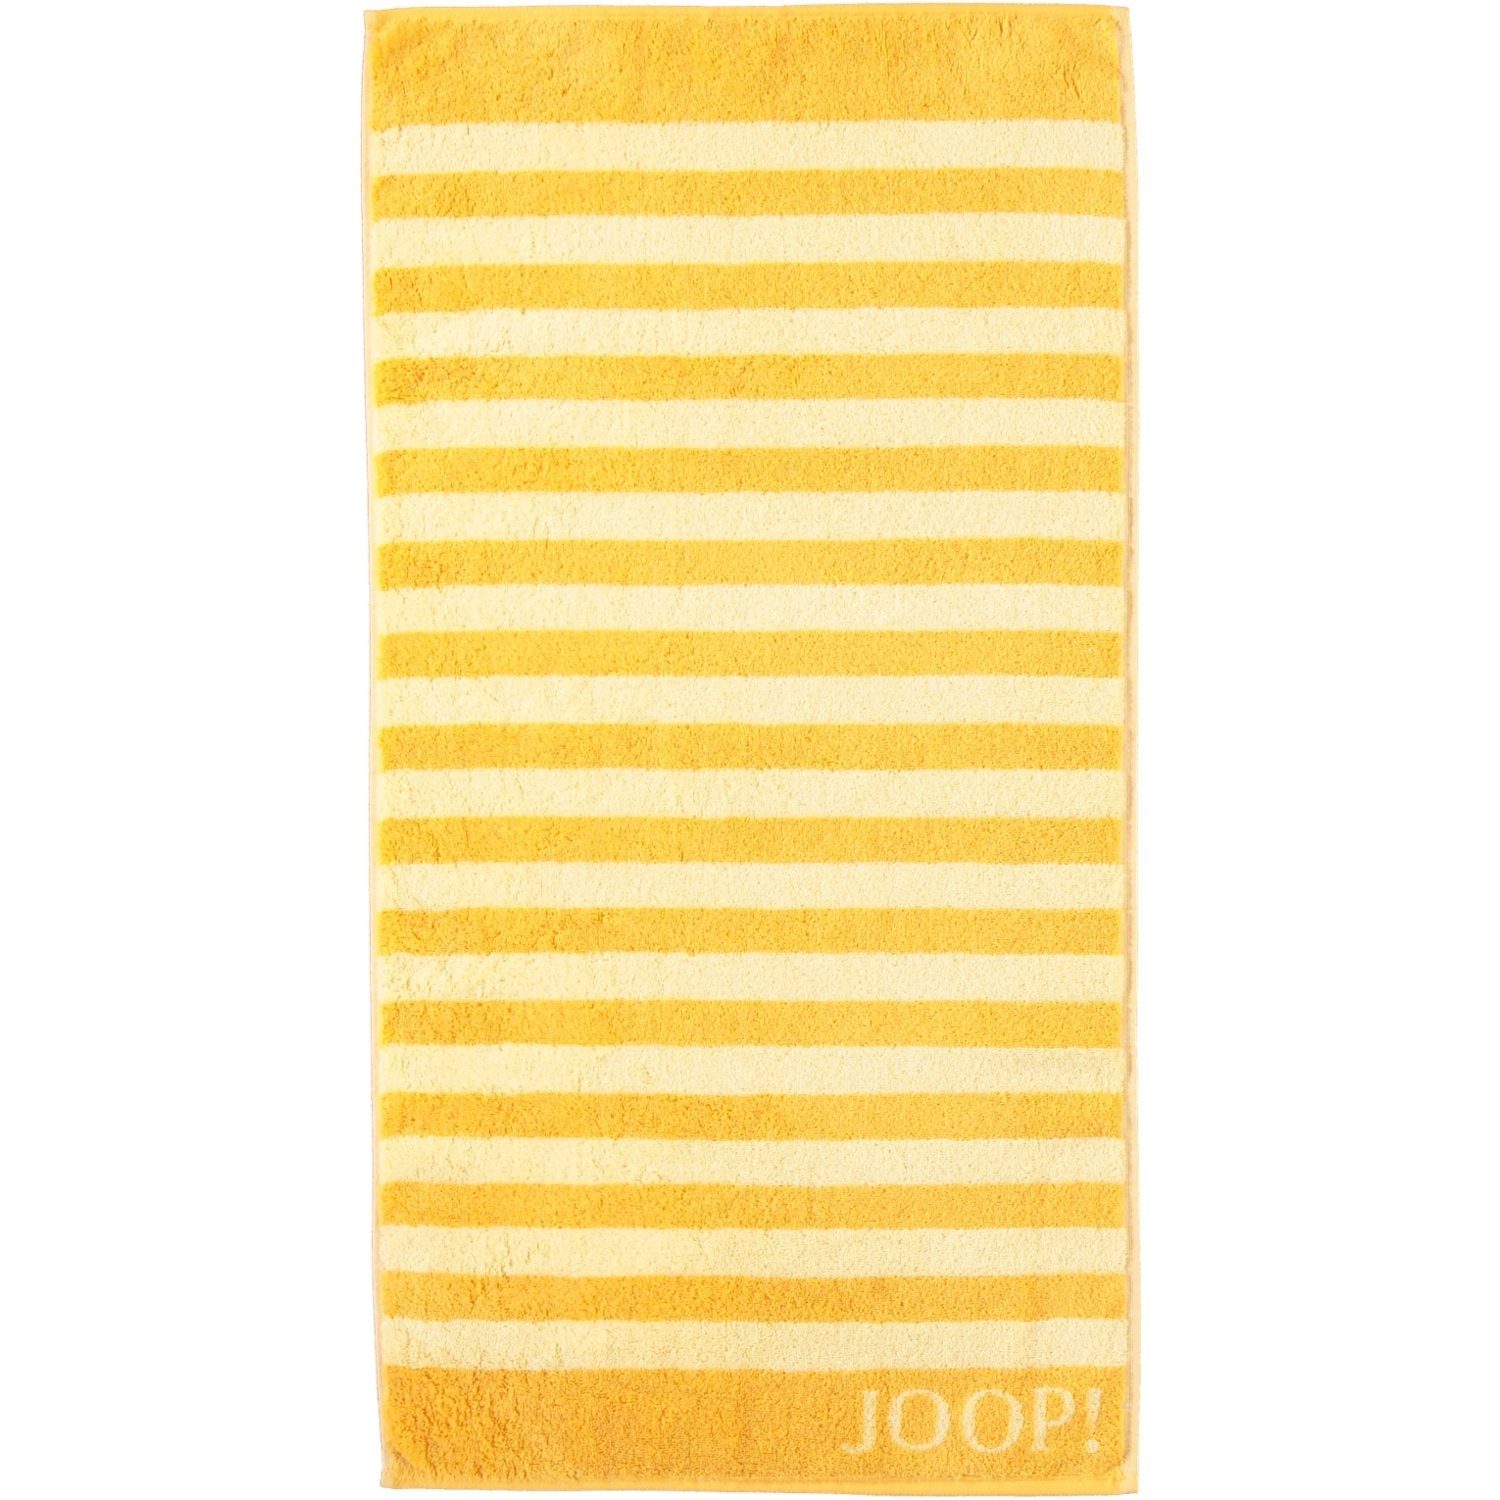 Joop! Handtücher Baumwolle Stripes 100% 1610, Classic